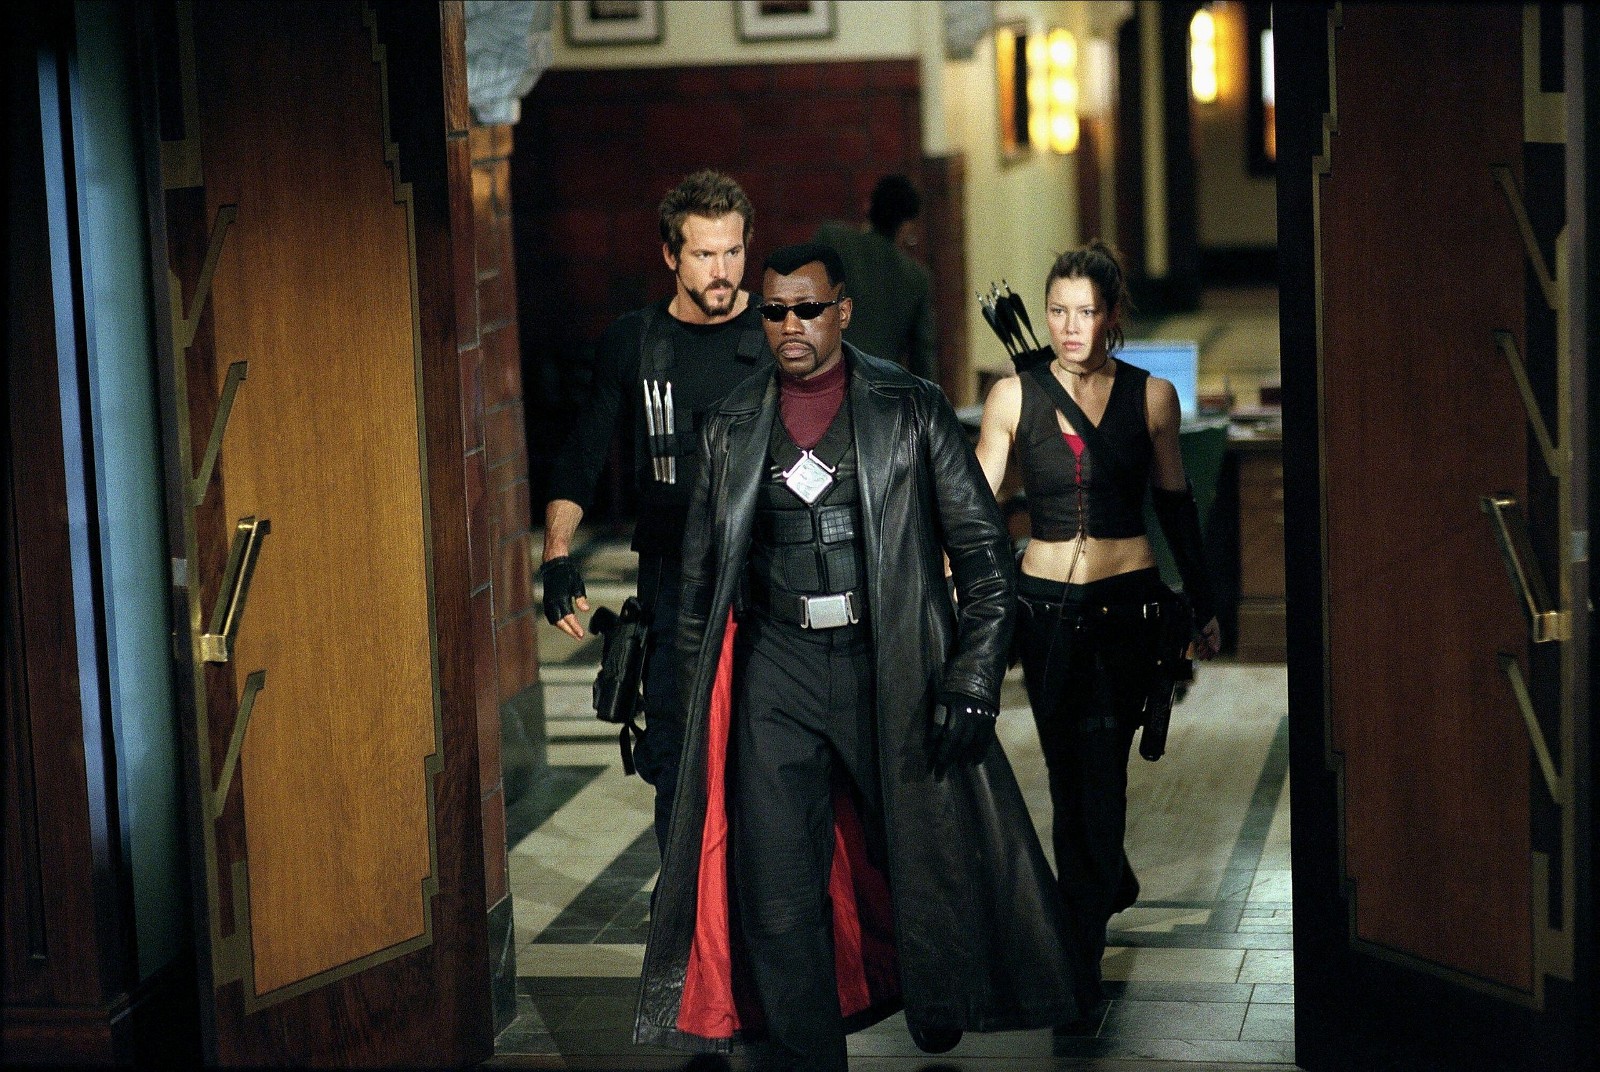 Blade: Trinity (2004)